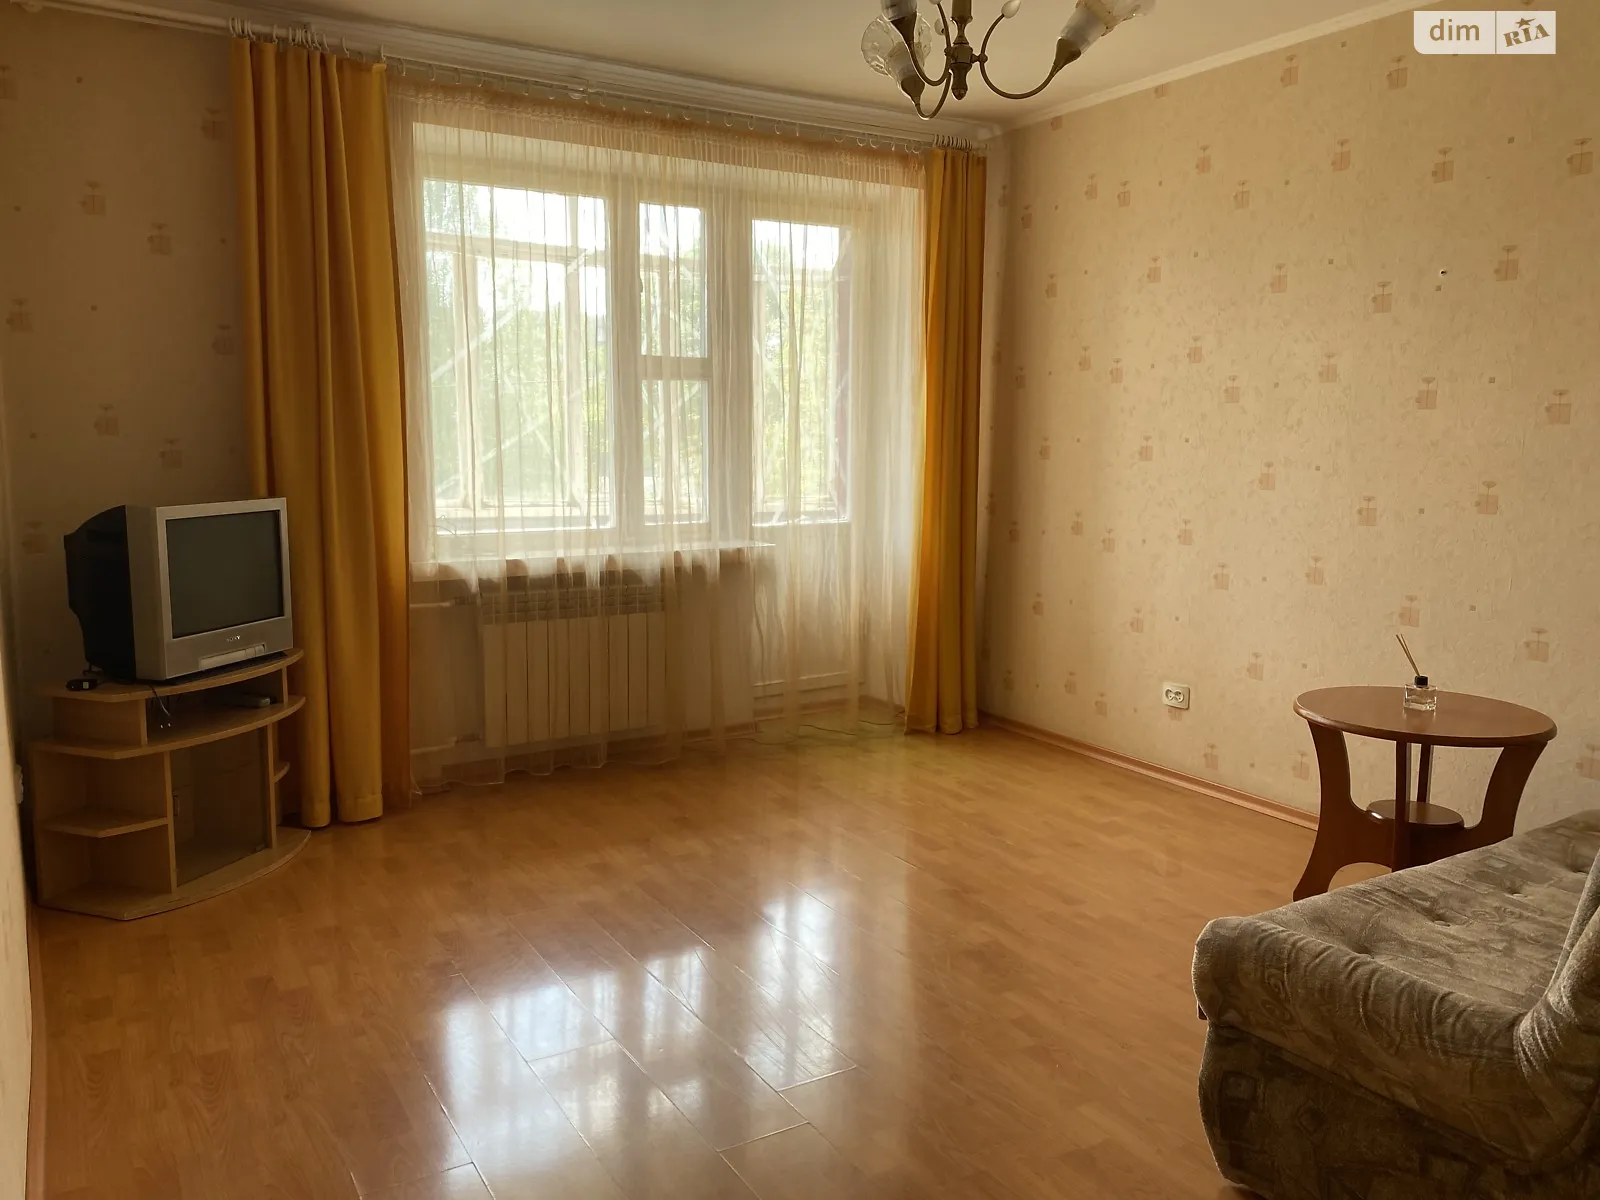 1-кімнатна квартира 34.4 кв. м у Луцьку, цена: 38000 $